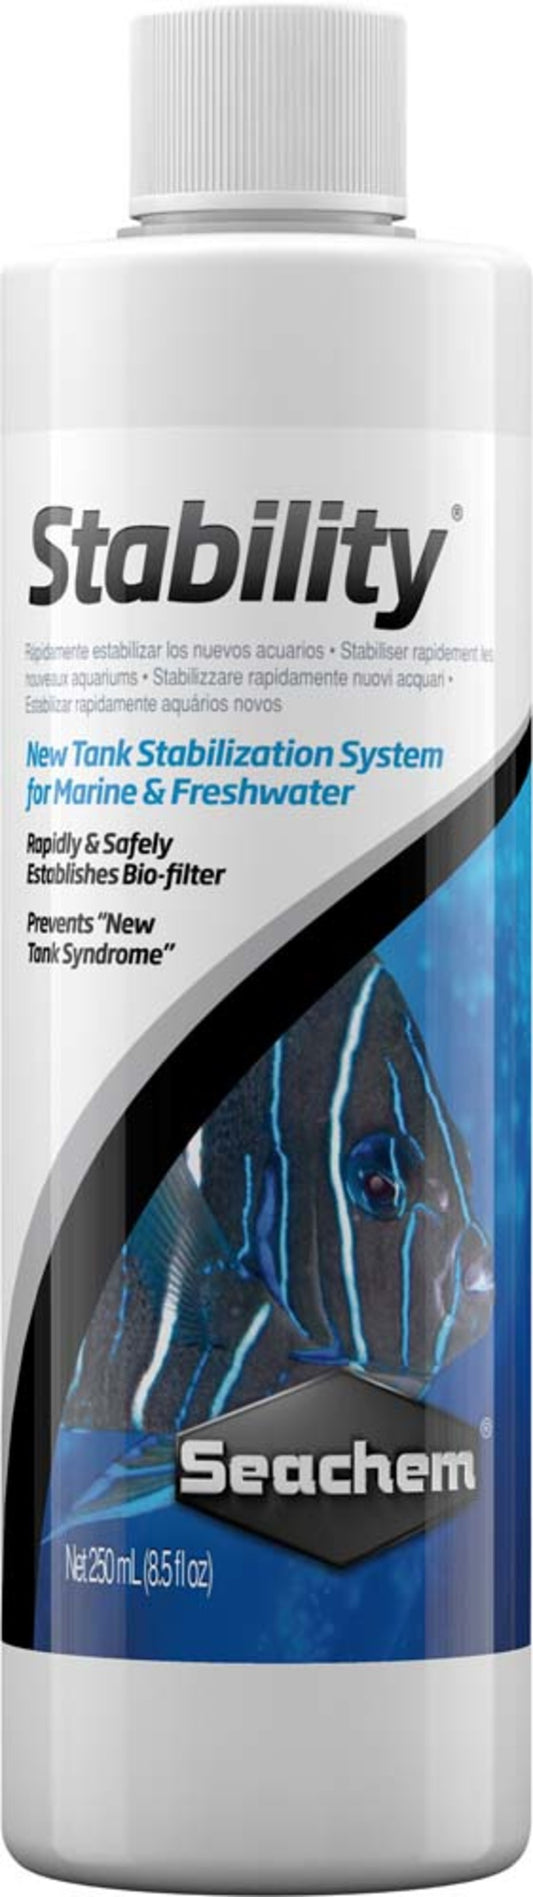 Seachem Stability Biological Water Conditioner 8.5oz